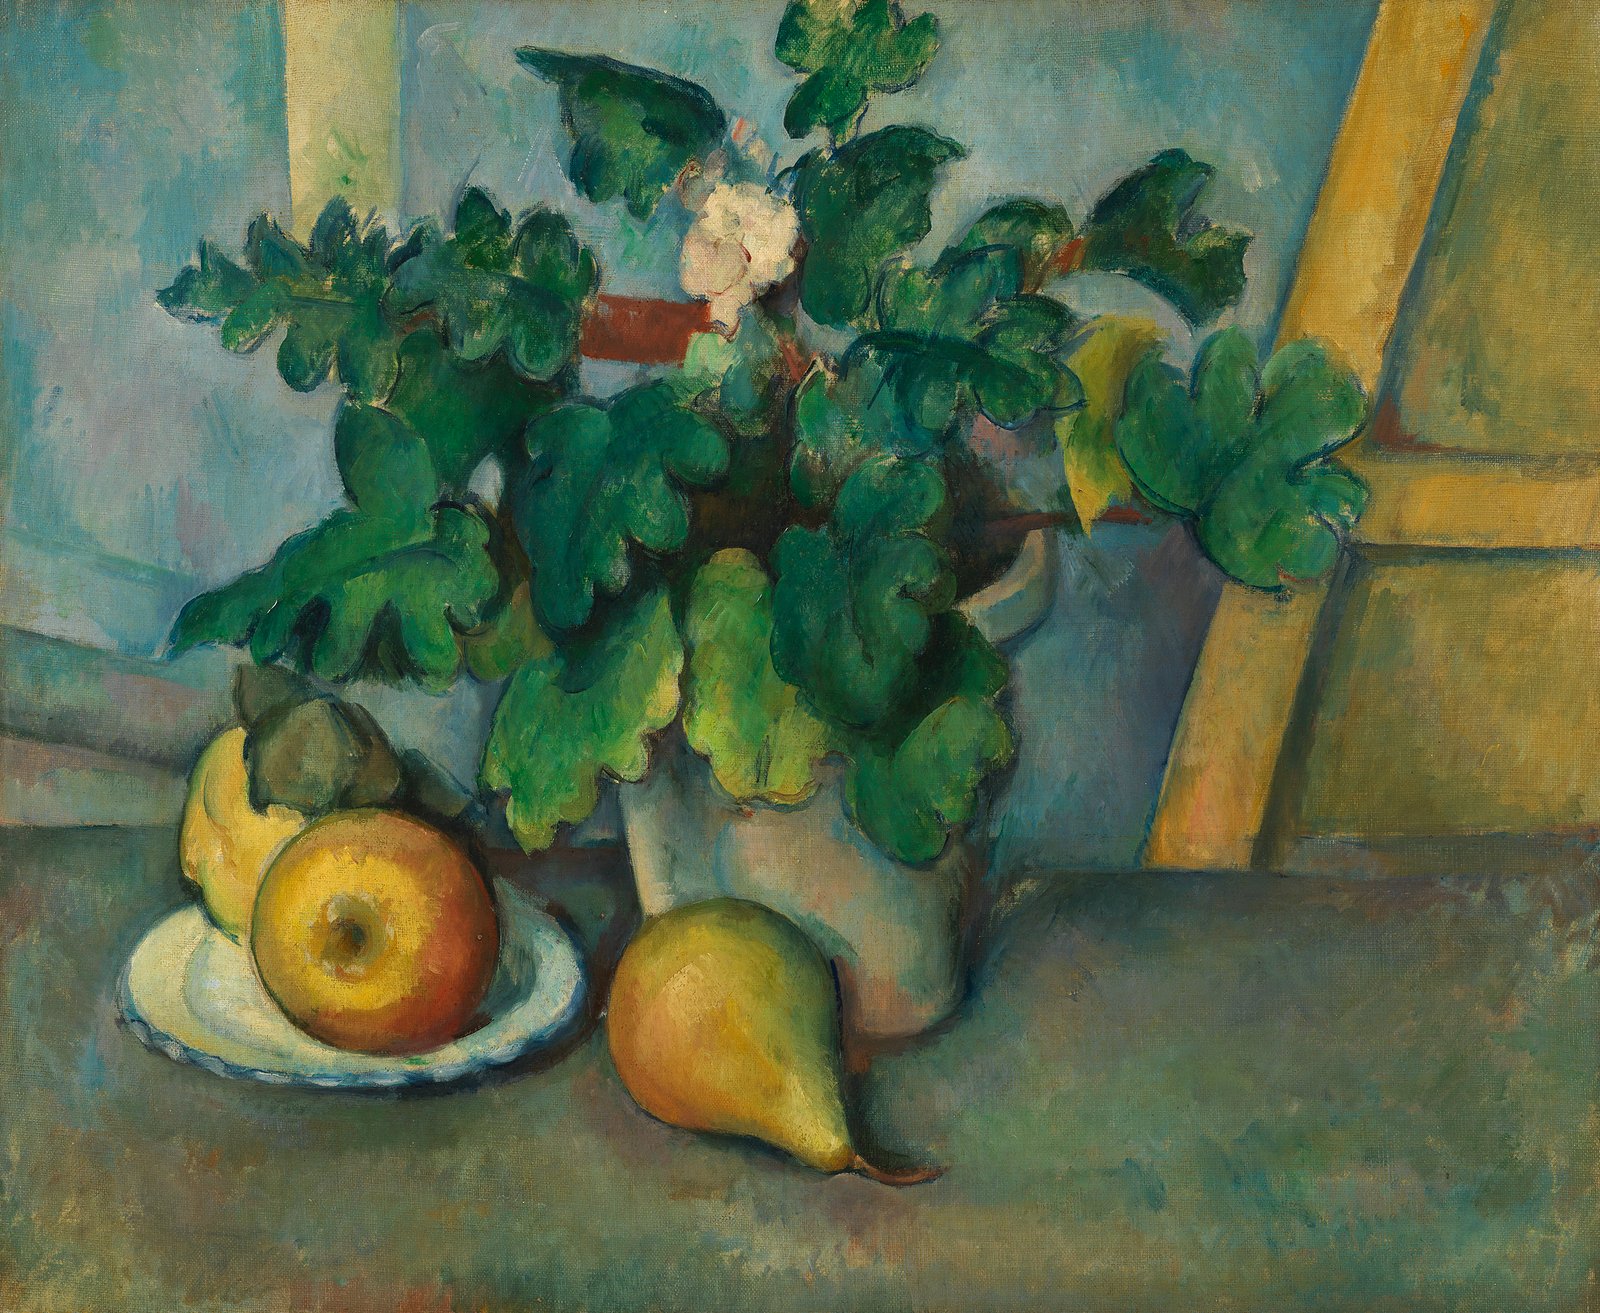 Pot of Primroses and Fruit - Paul Cézanne, c. 1888-90